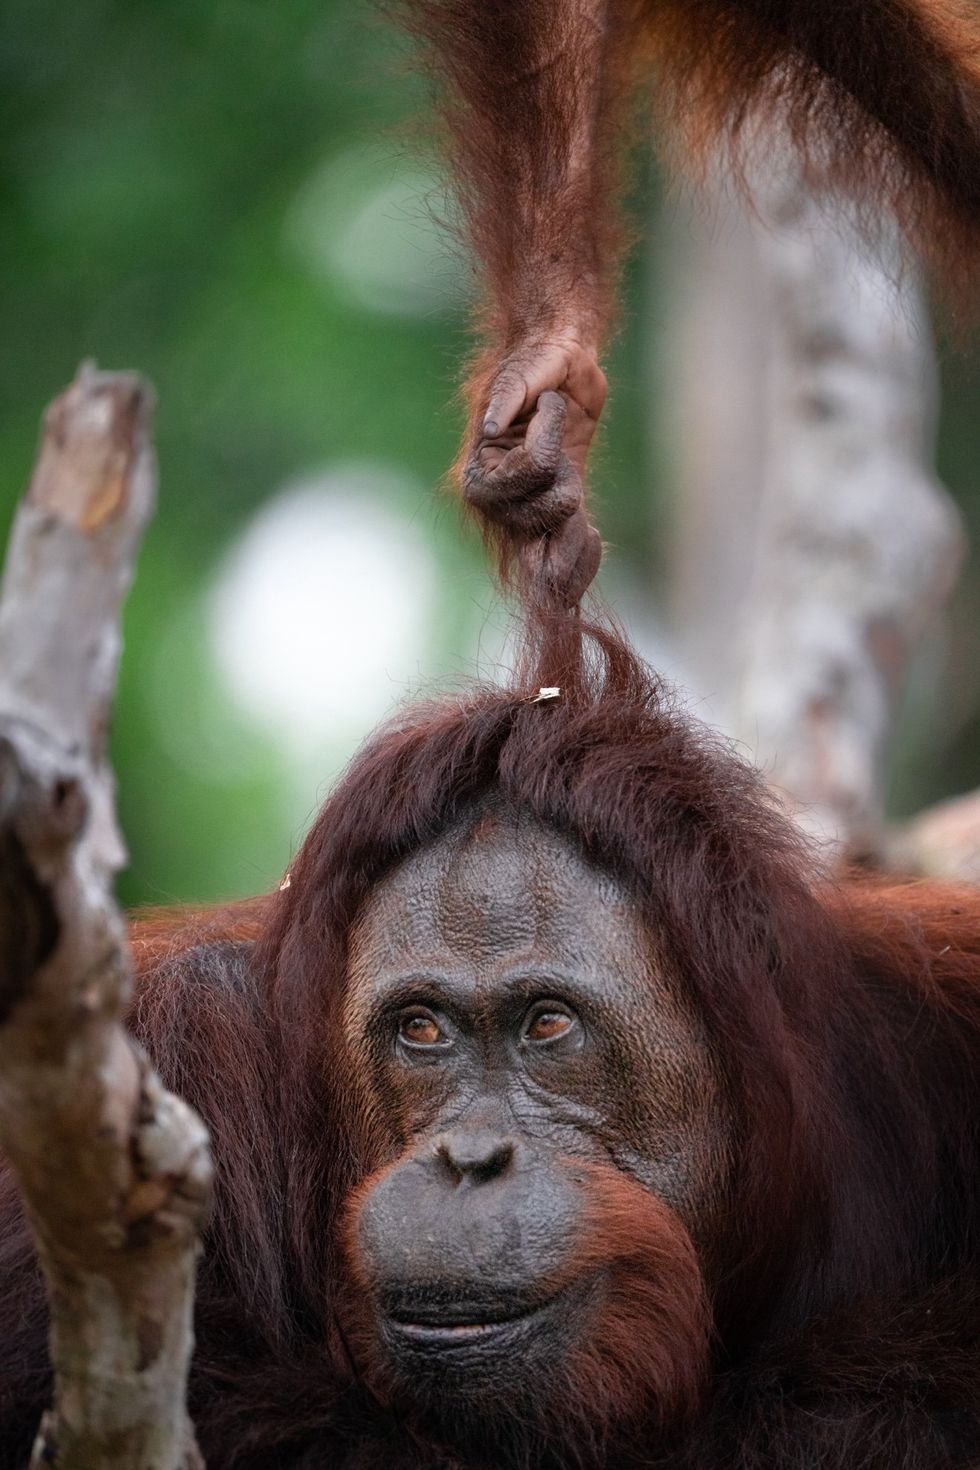 A juvenile orangutan pulling its mother's hair.